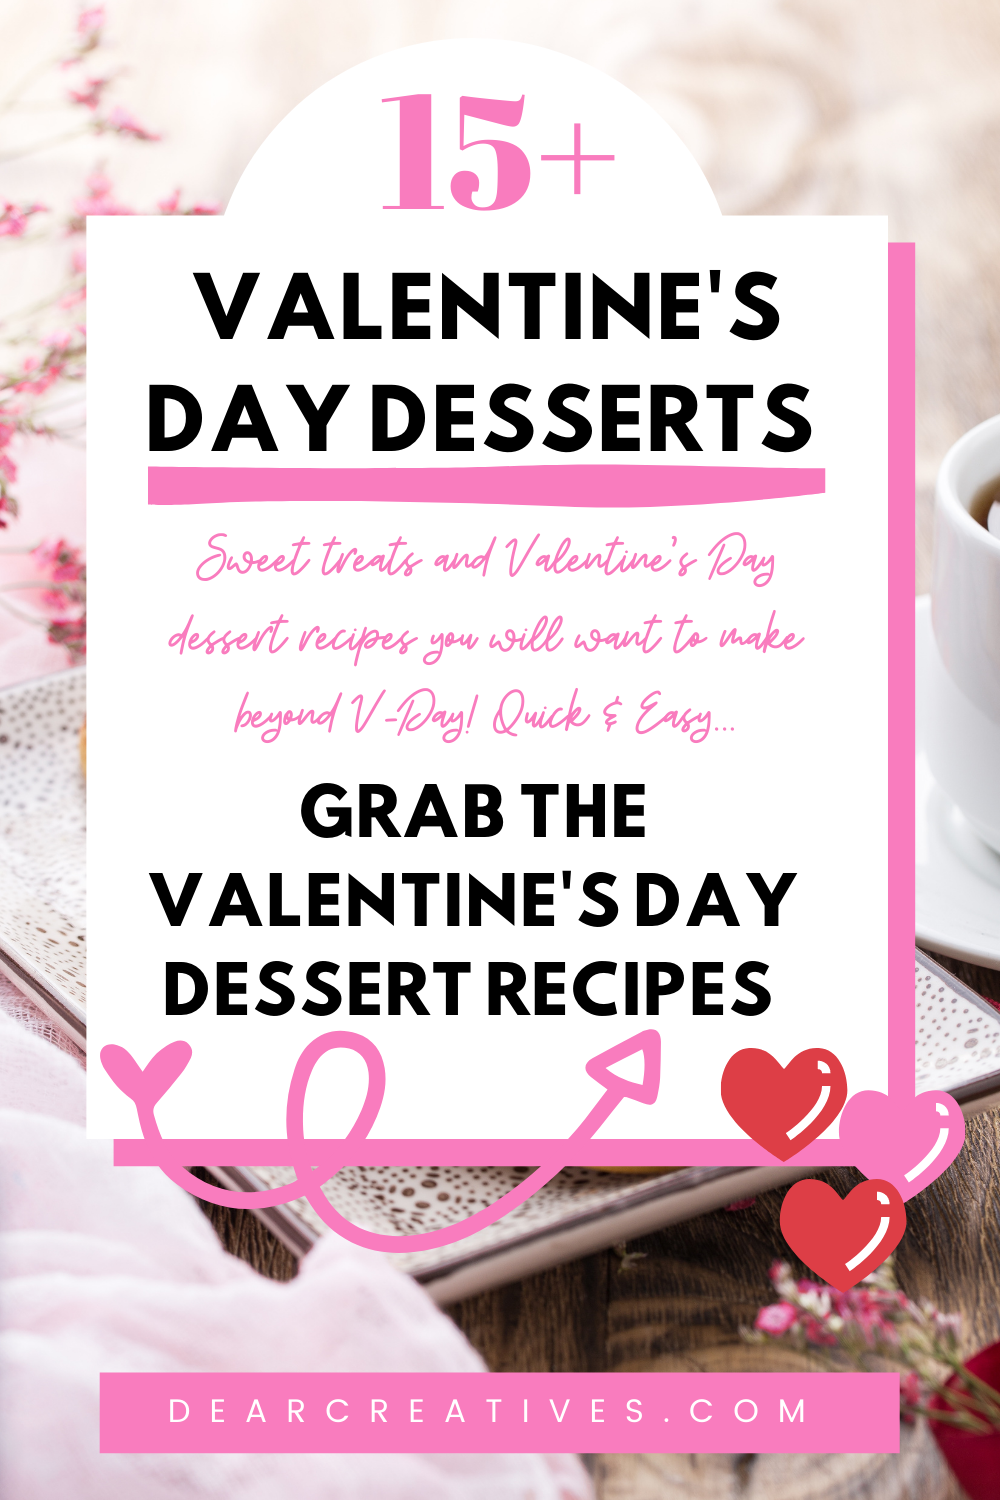 15+ Valentine’s Day Dessert Recipes To Make!